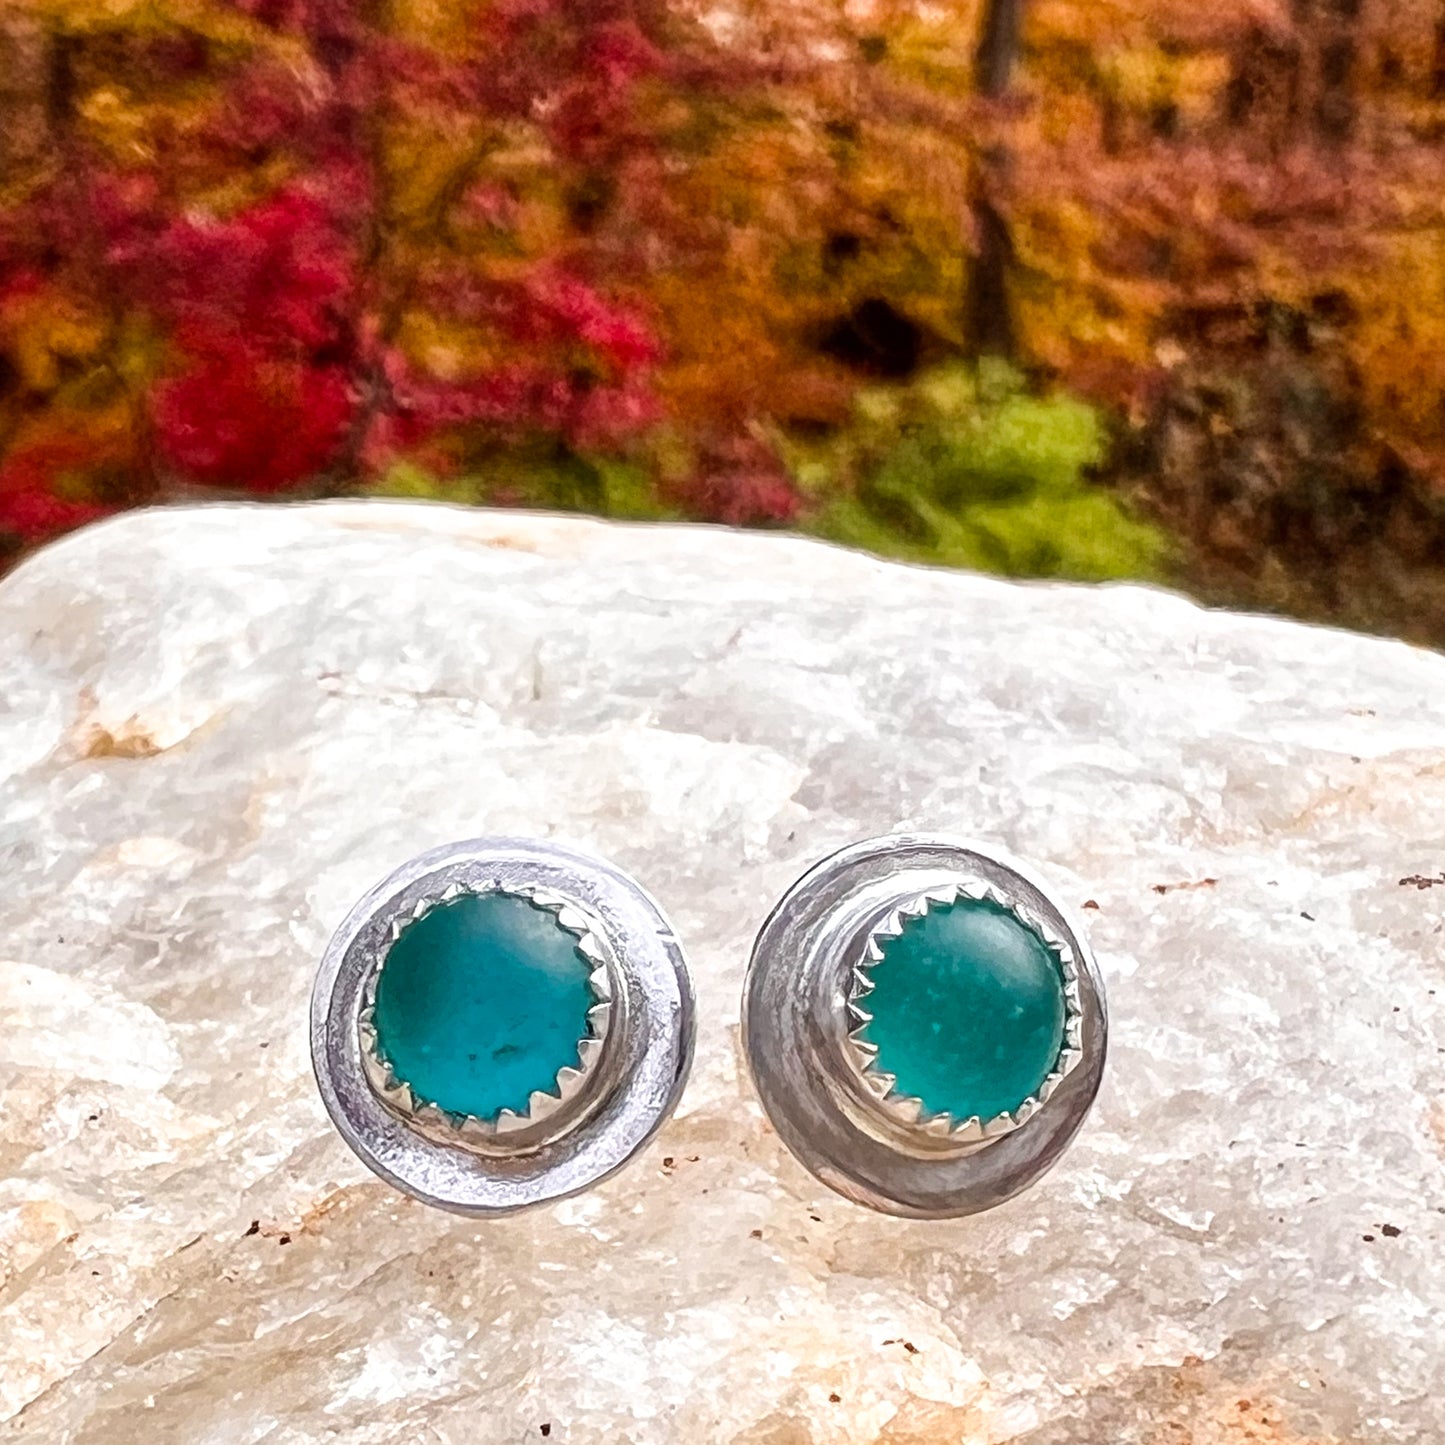 Turquoise Sea Glass Post Earrings